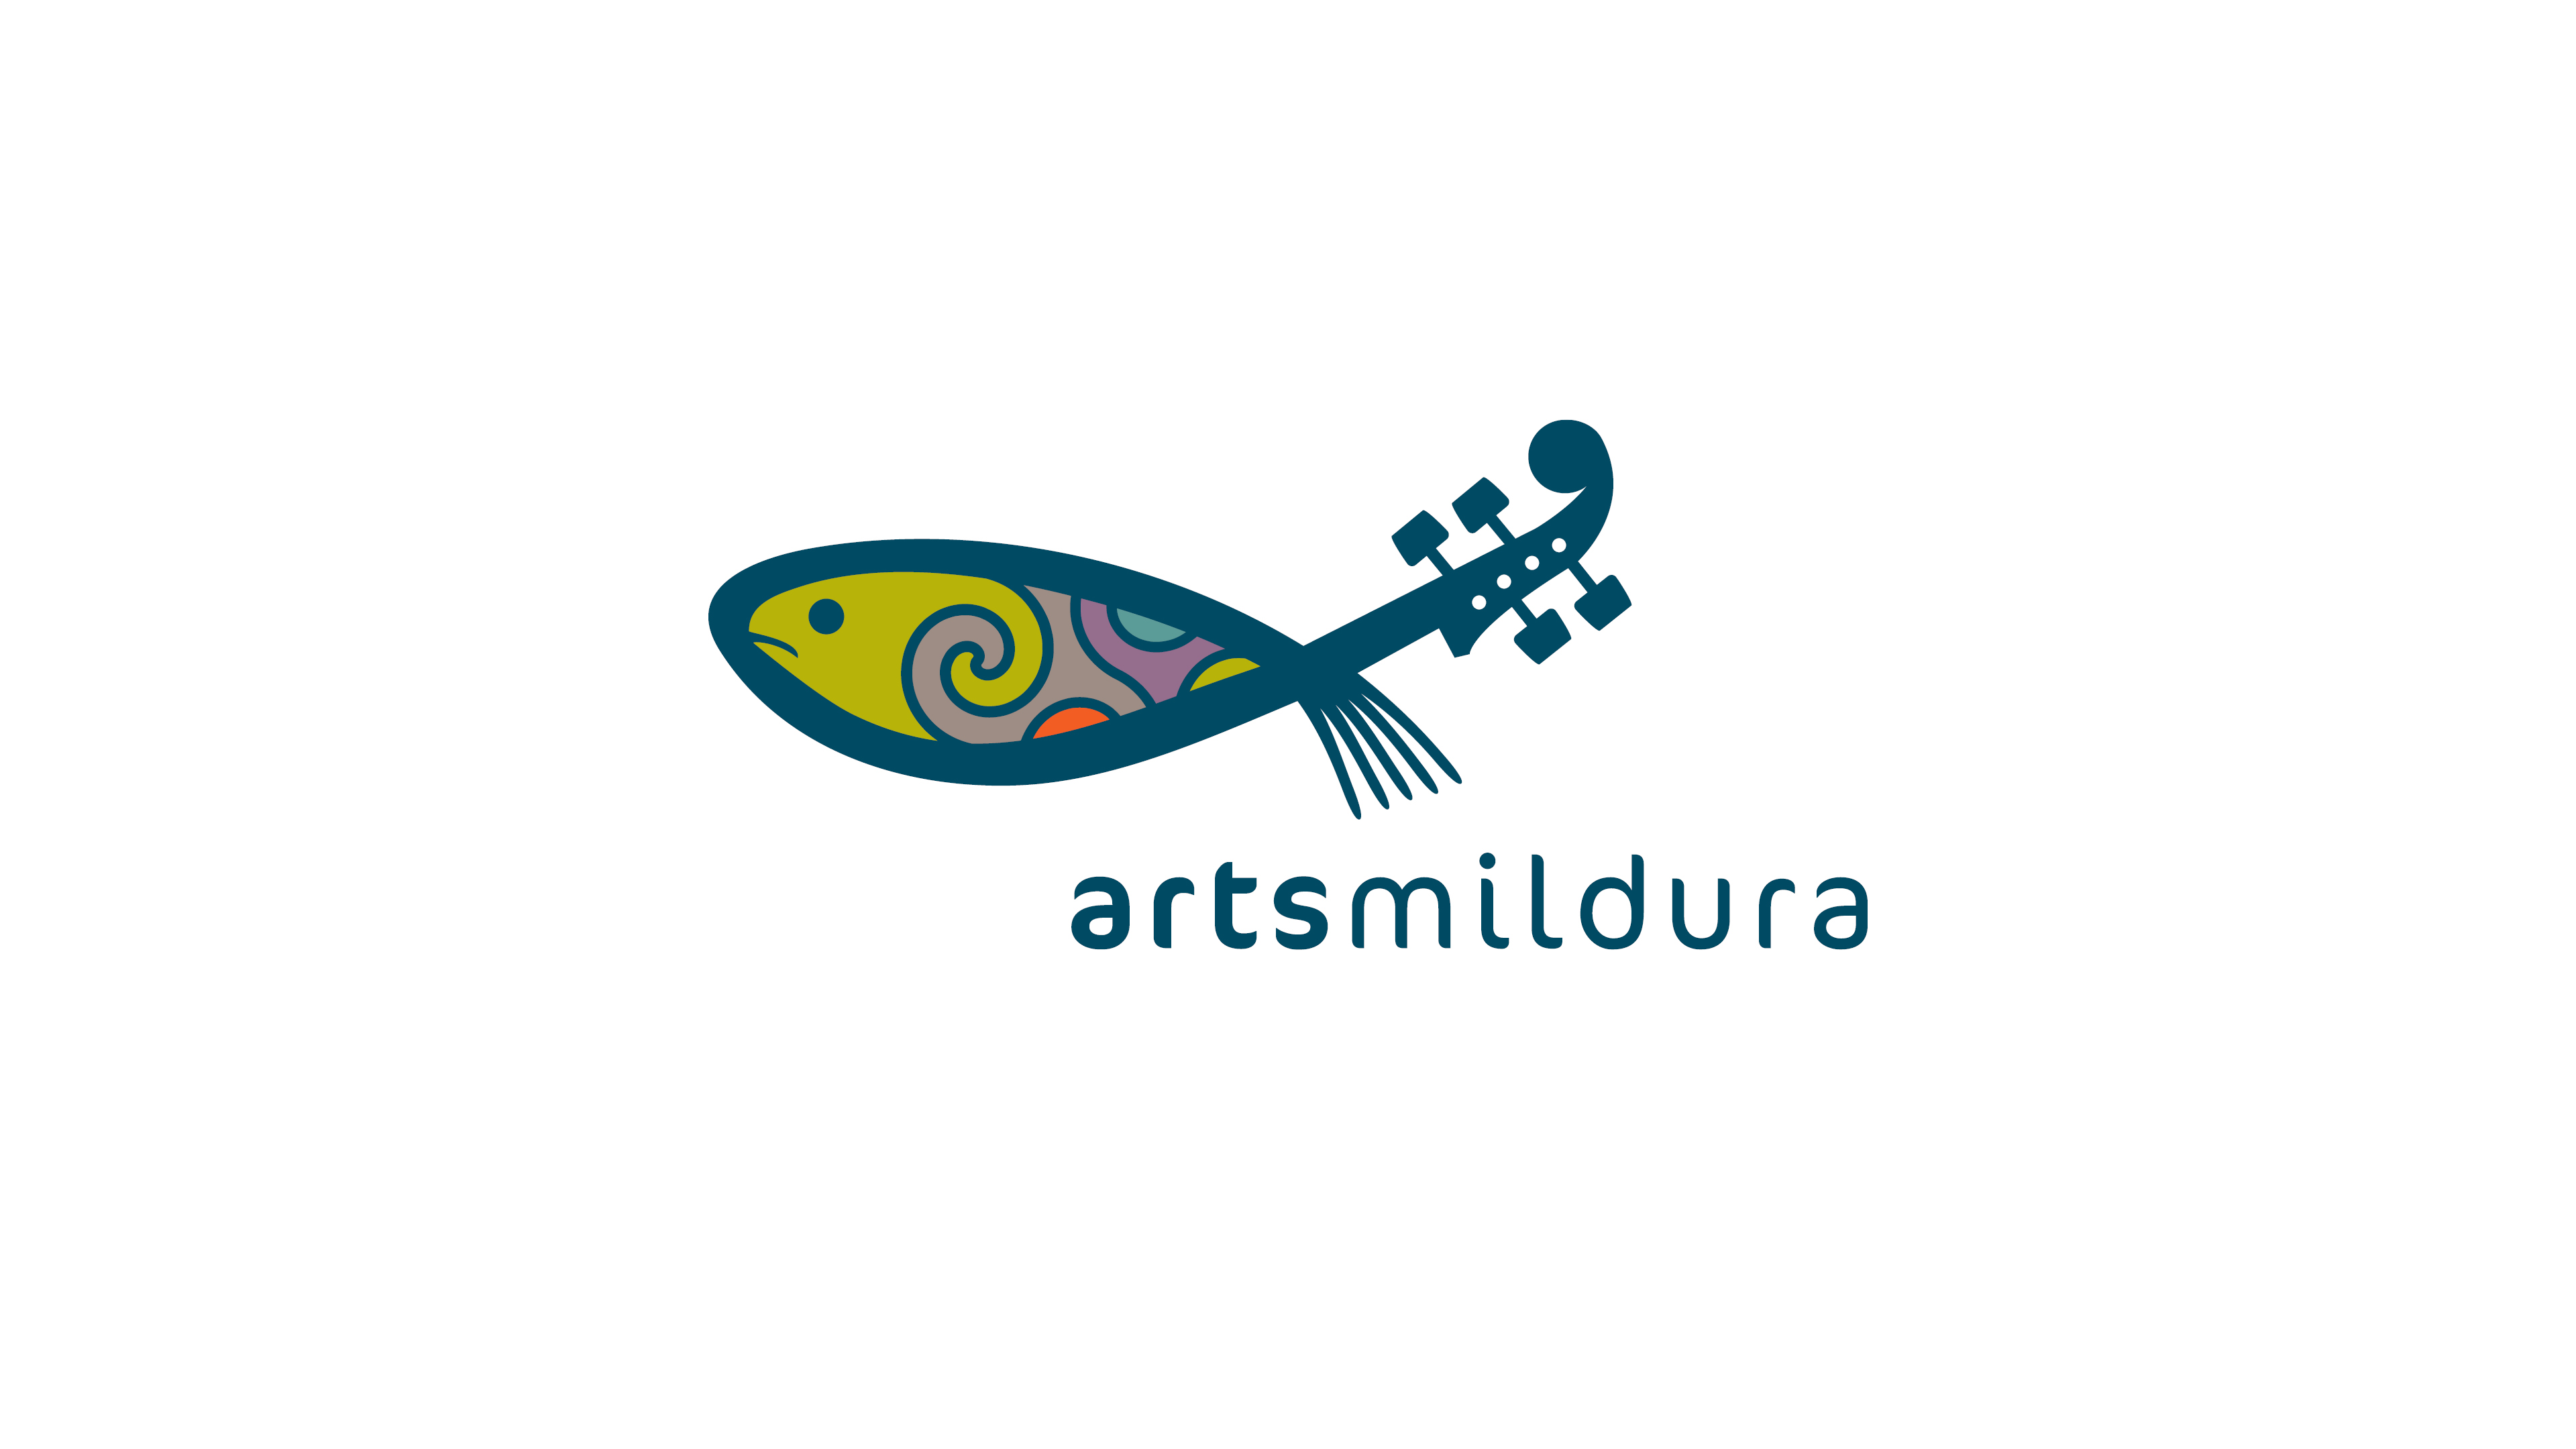 Arts Mildura Logo and Branding Design - Saunders Design Group